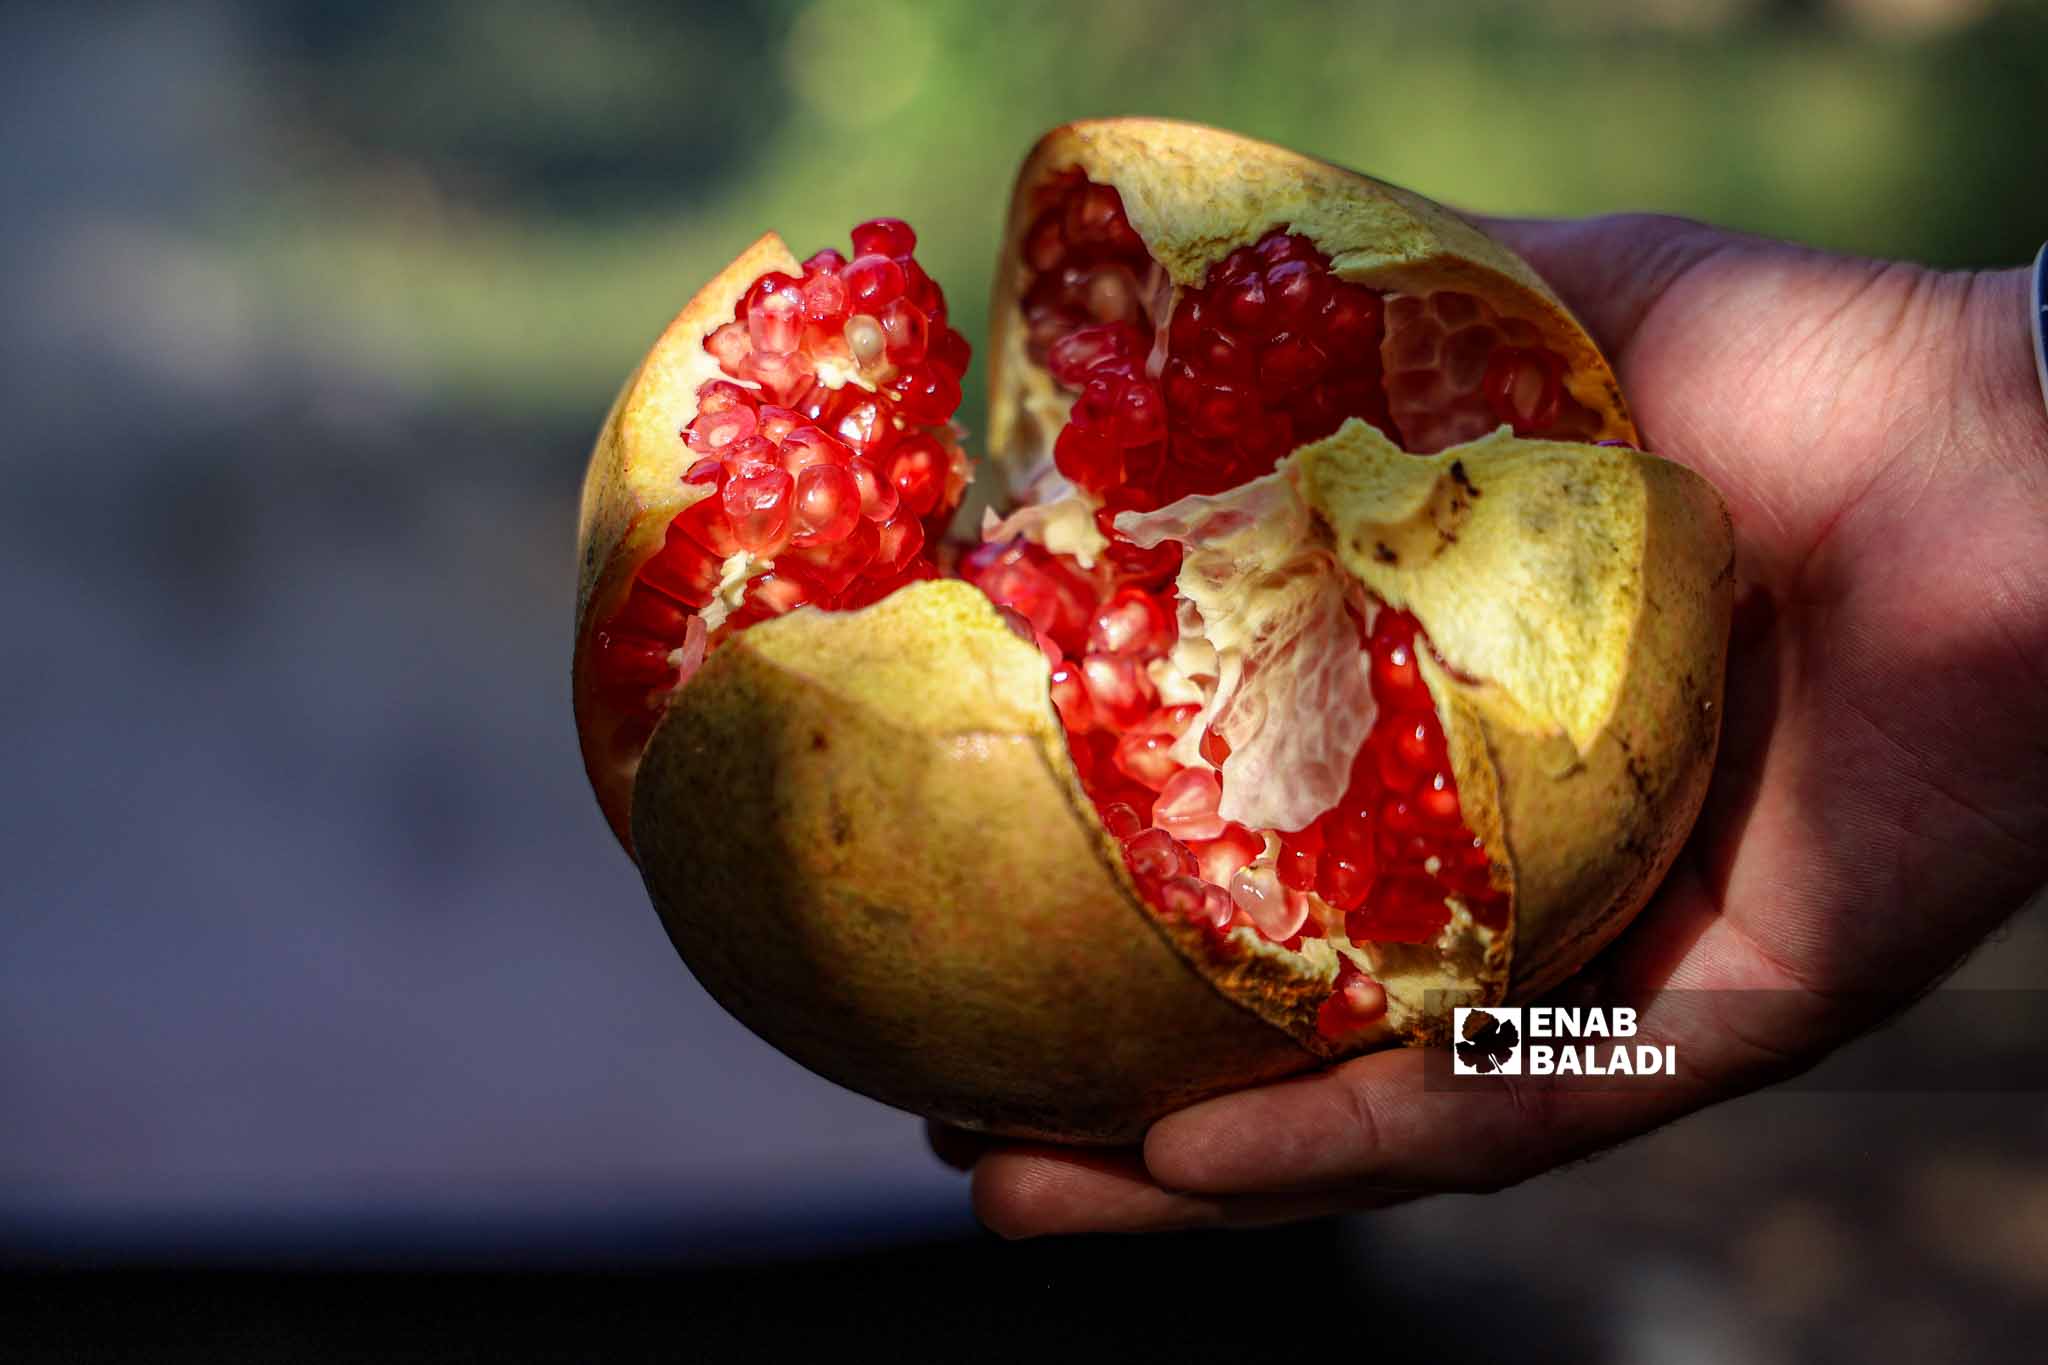 Pomegranate picking season in Basoutah village in Afrin region, Aleppo countryside - 18 October 2022 (Enab Baladi / Amir Kharboutli)
